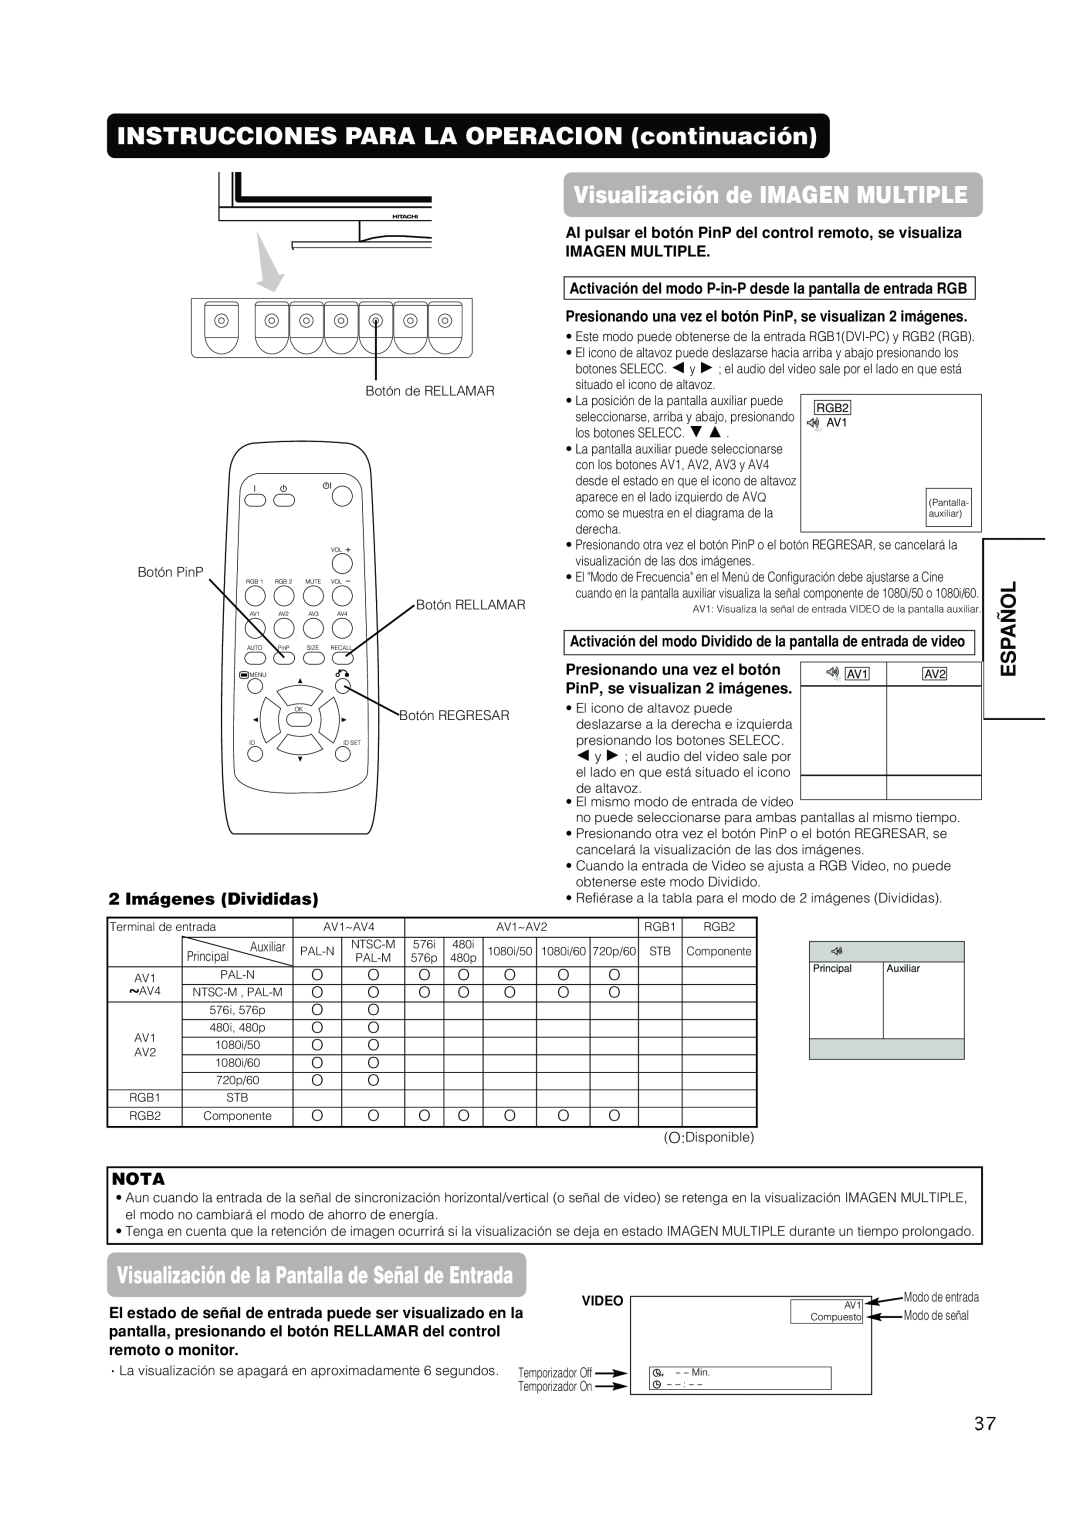 Hitachi PW1A user manual Visualización de IMAGEN MULTIPLE, Visualización de la Pantalla de Señal de Entrada, Español, Nota 